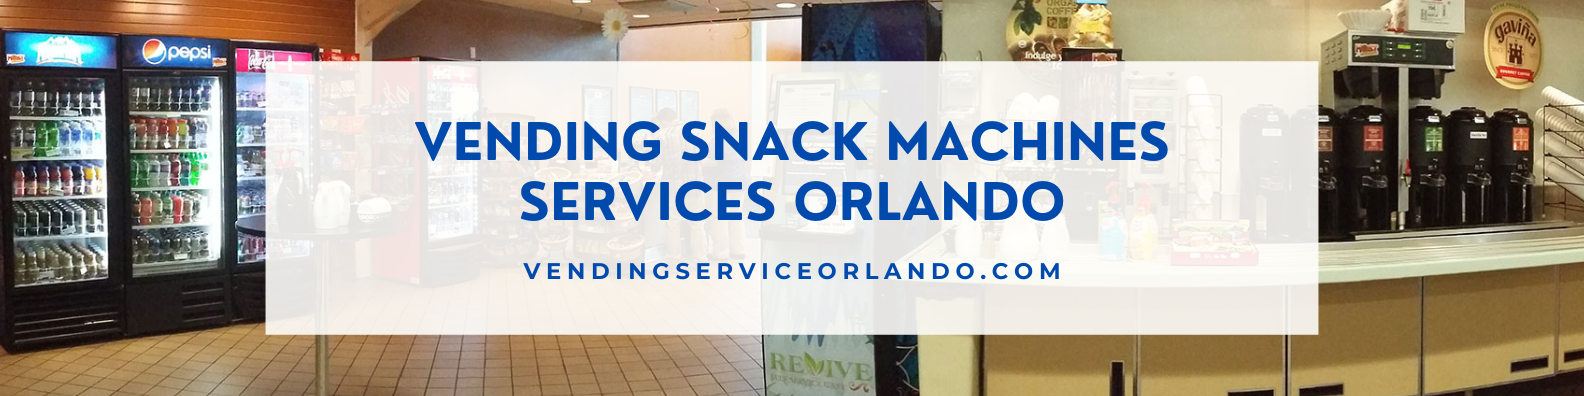 Local Orlando Vending Machine Services